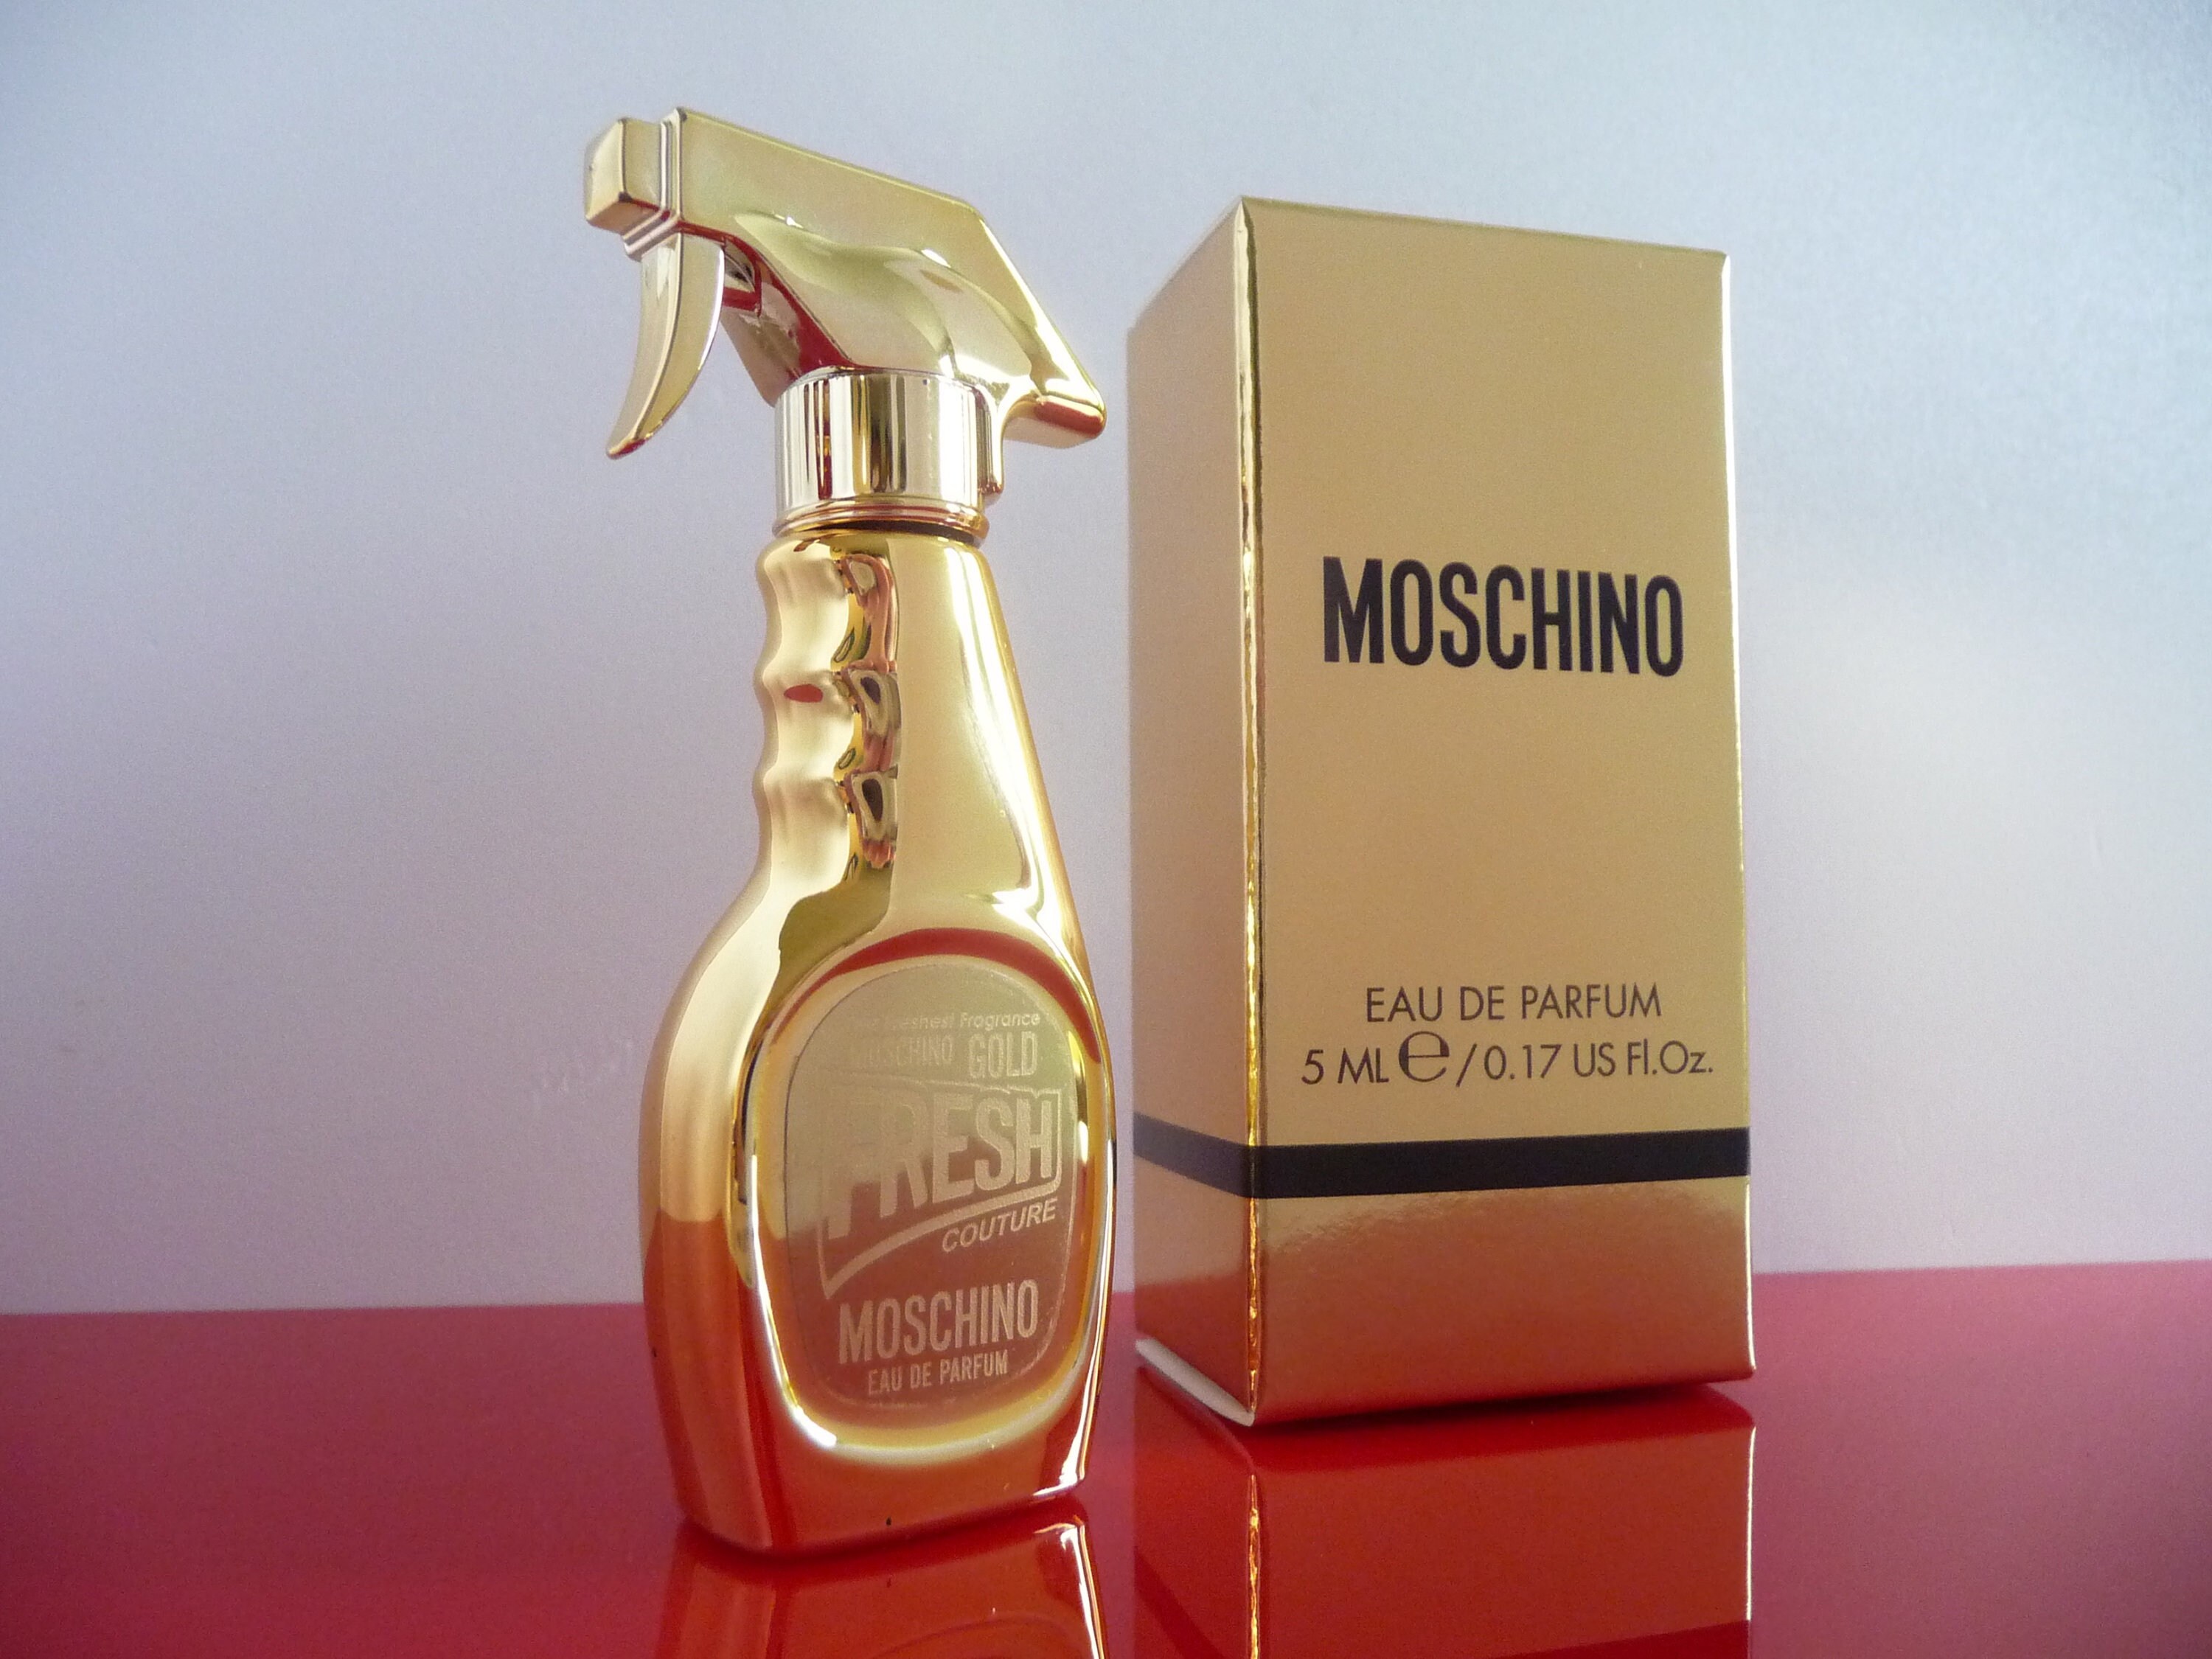 Moschino gold. Moschino Gold Fresh Couture. Moschino Fresh Gold. Moschino духи золотые. Мини духи Moschino.